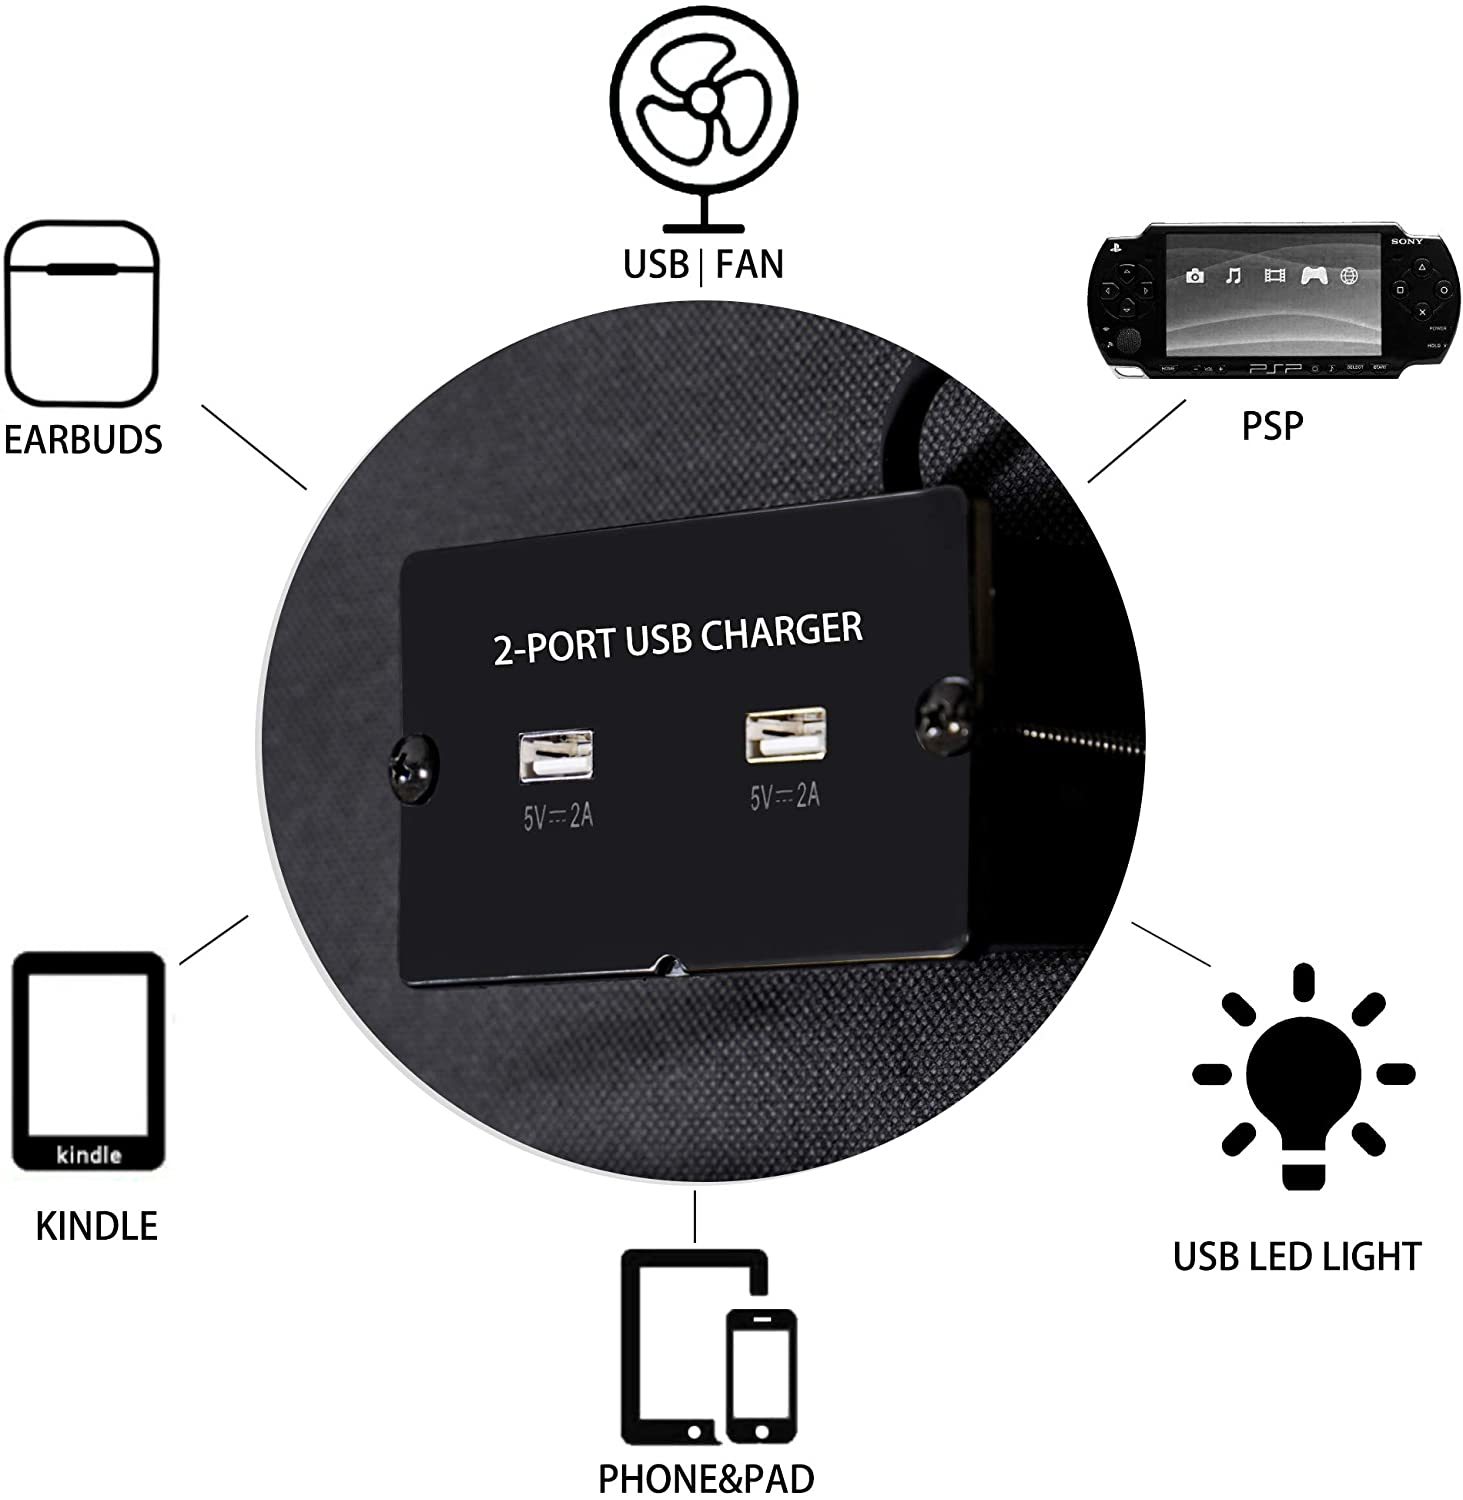 Kamots Beauty Adjustable Bed Reviews - USB ports